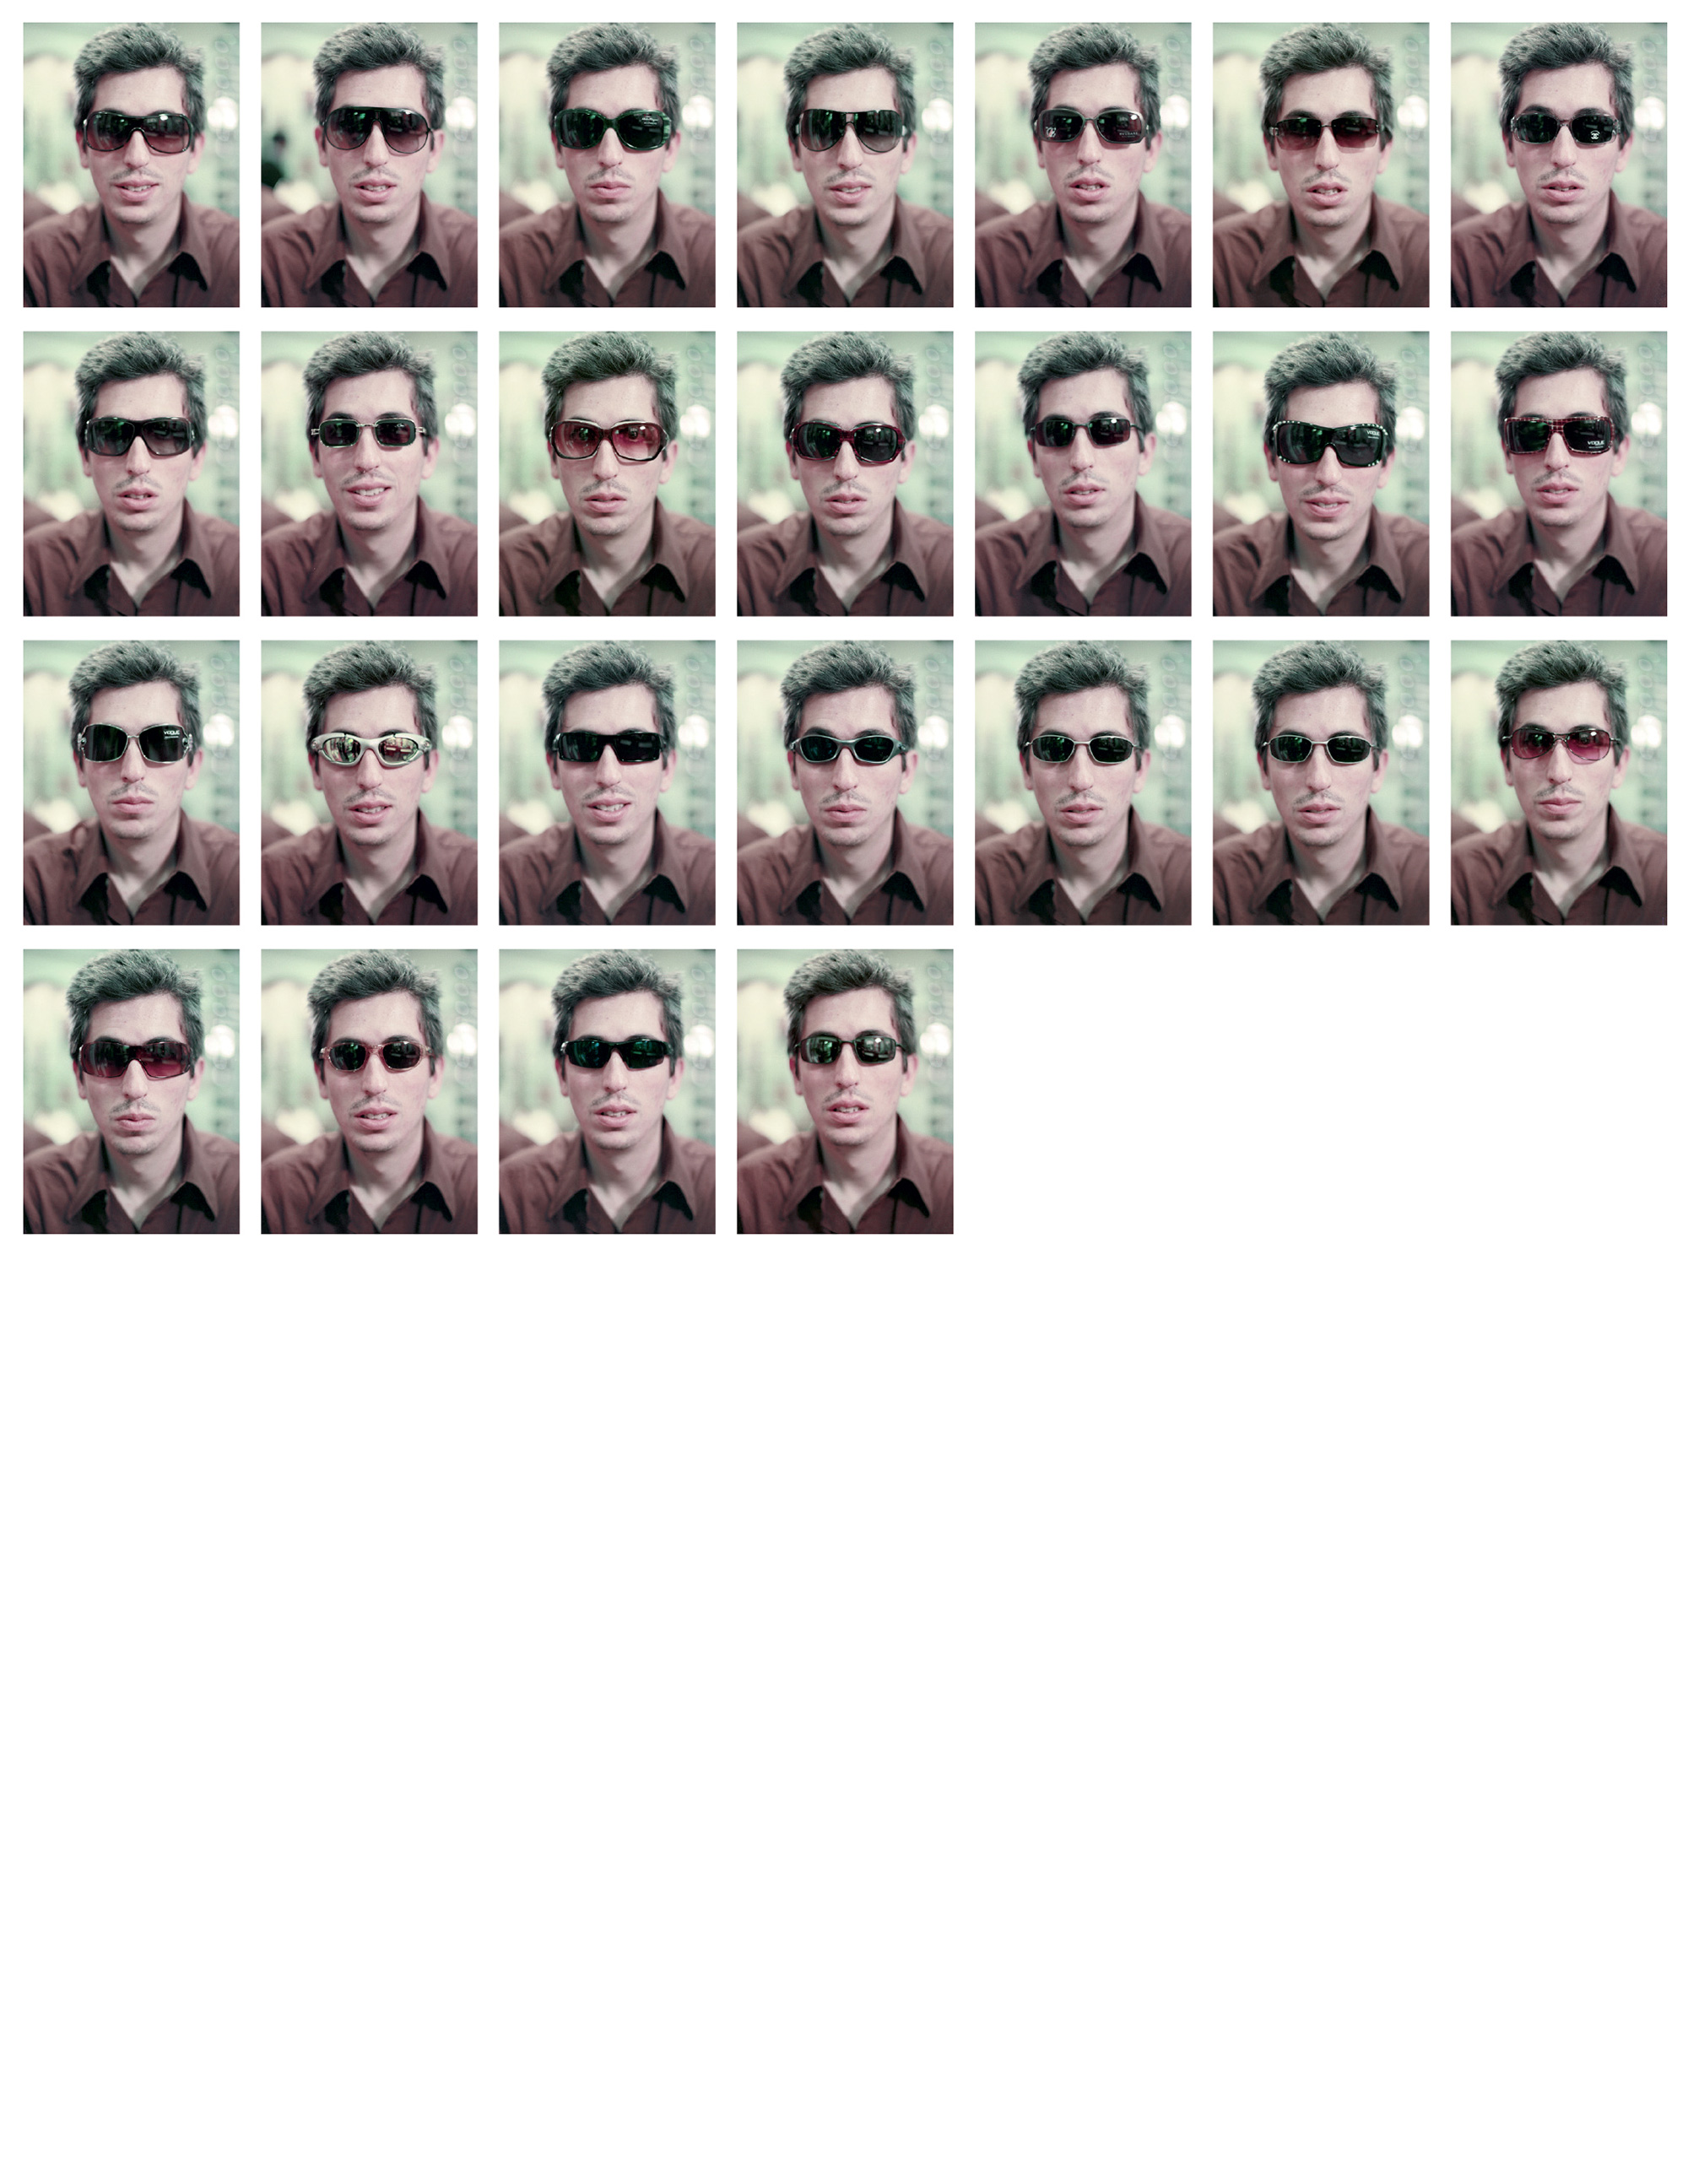 Twenty five small photographs, arranged in a grid, of artist San Keller wearing different sunglasses.